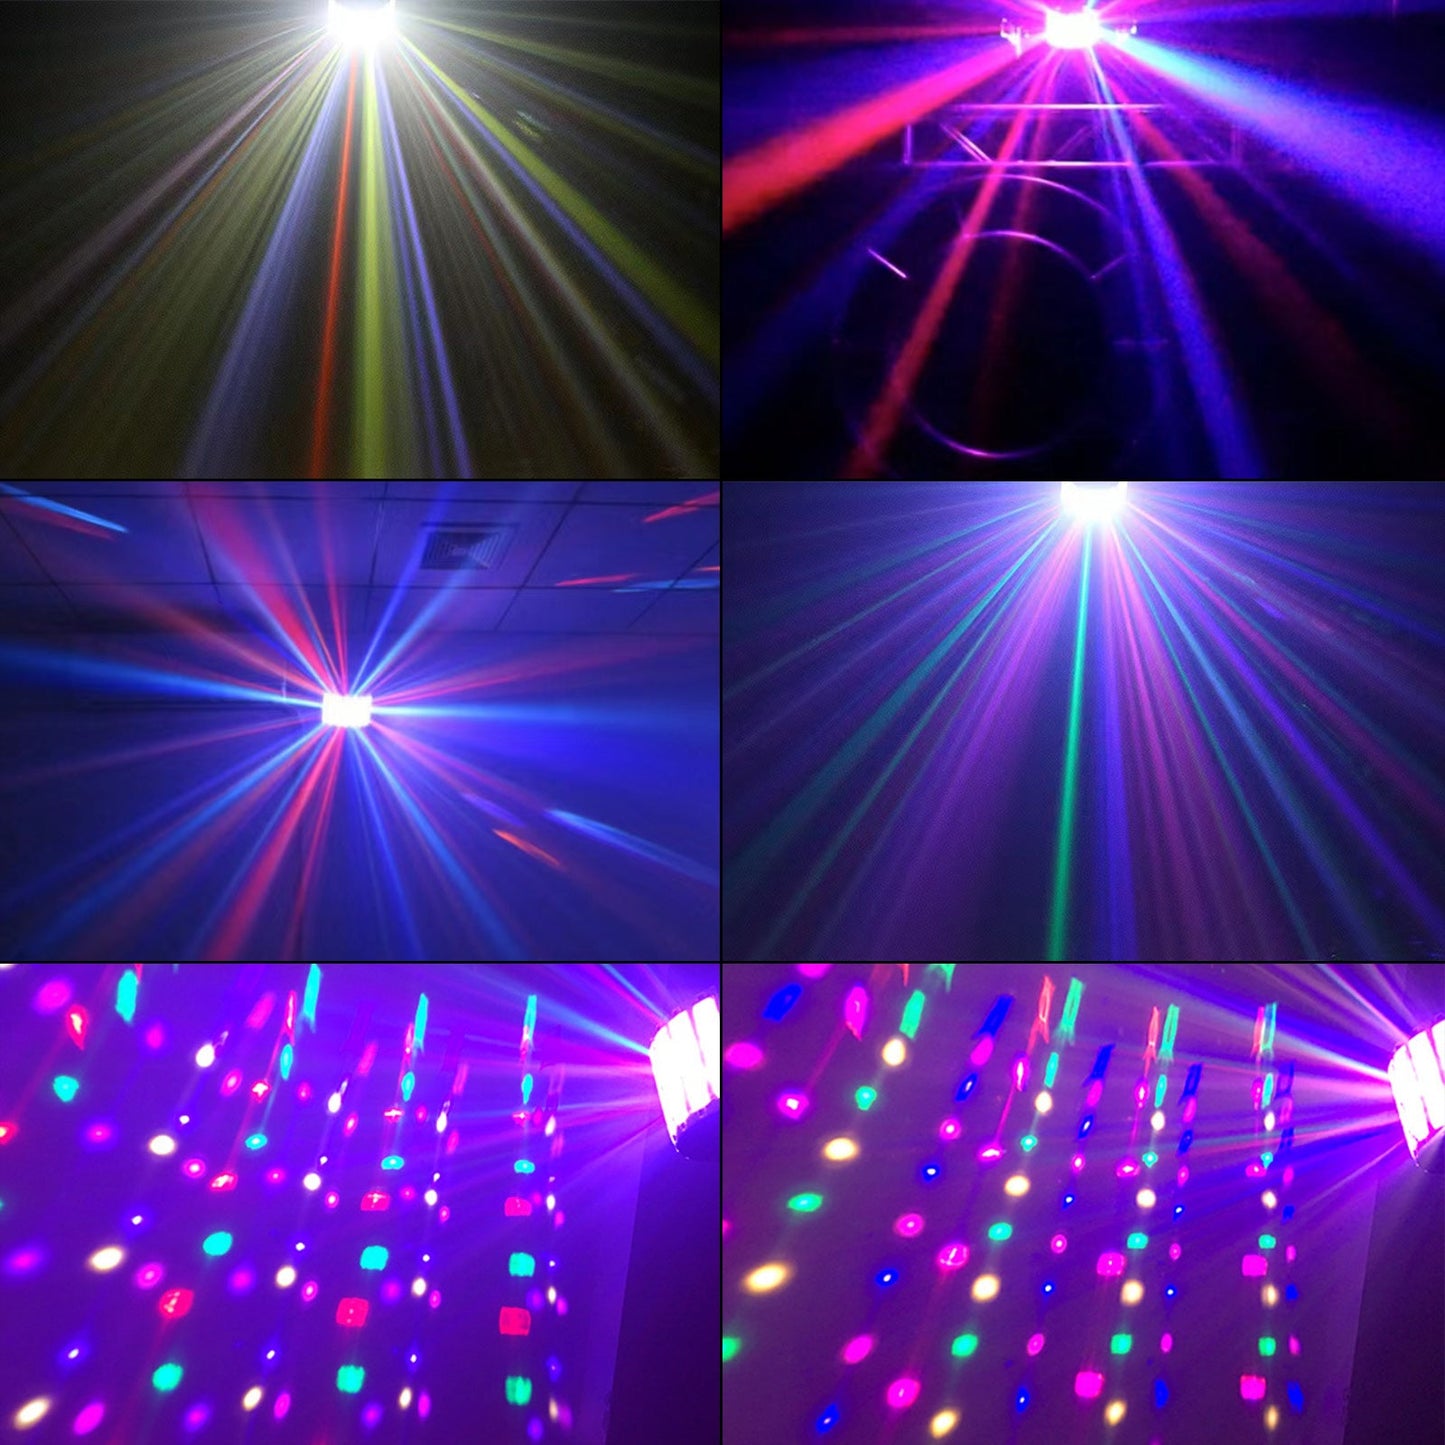 LED Mini Butterfly Light DMX DJ Disco Party Club Stage Effect Beam Light Fedex Express